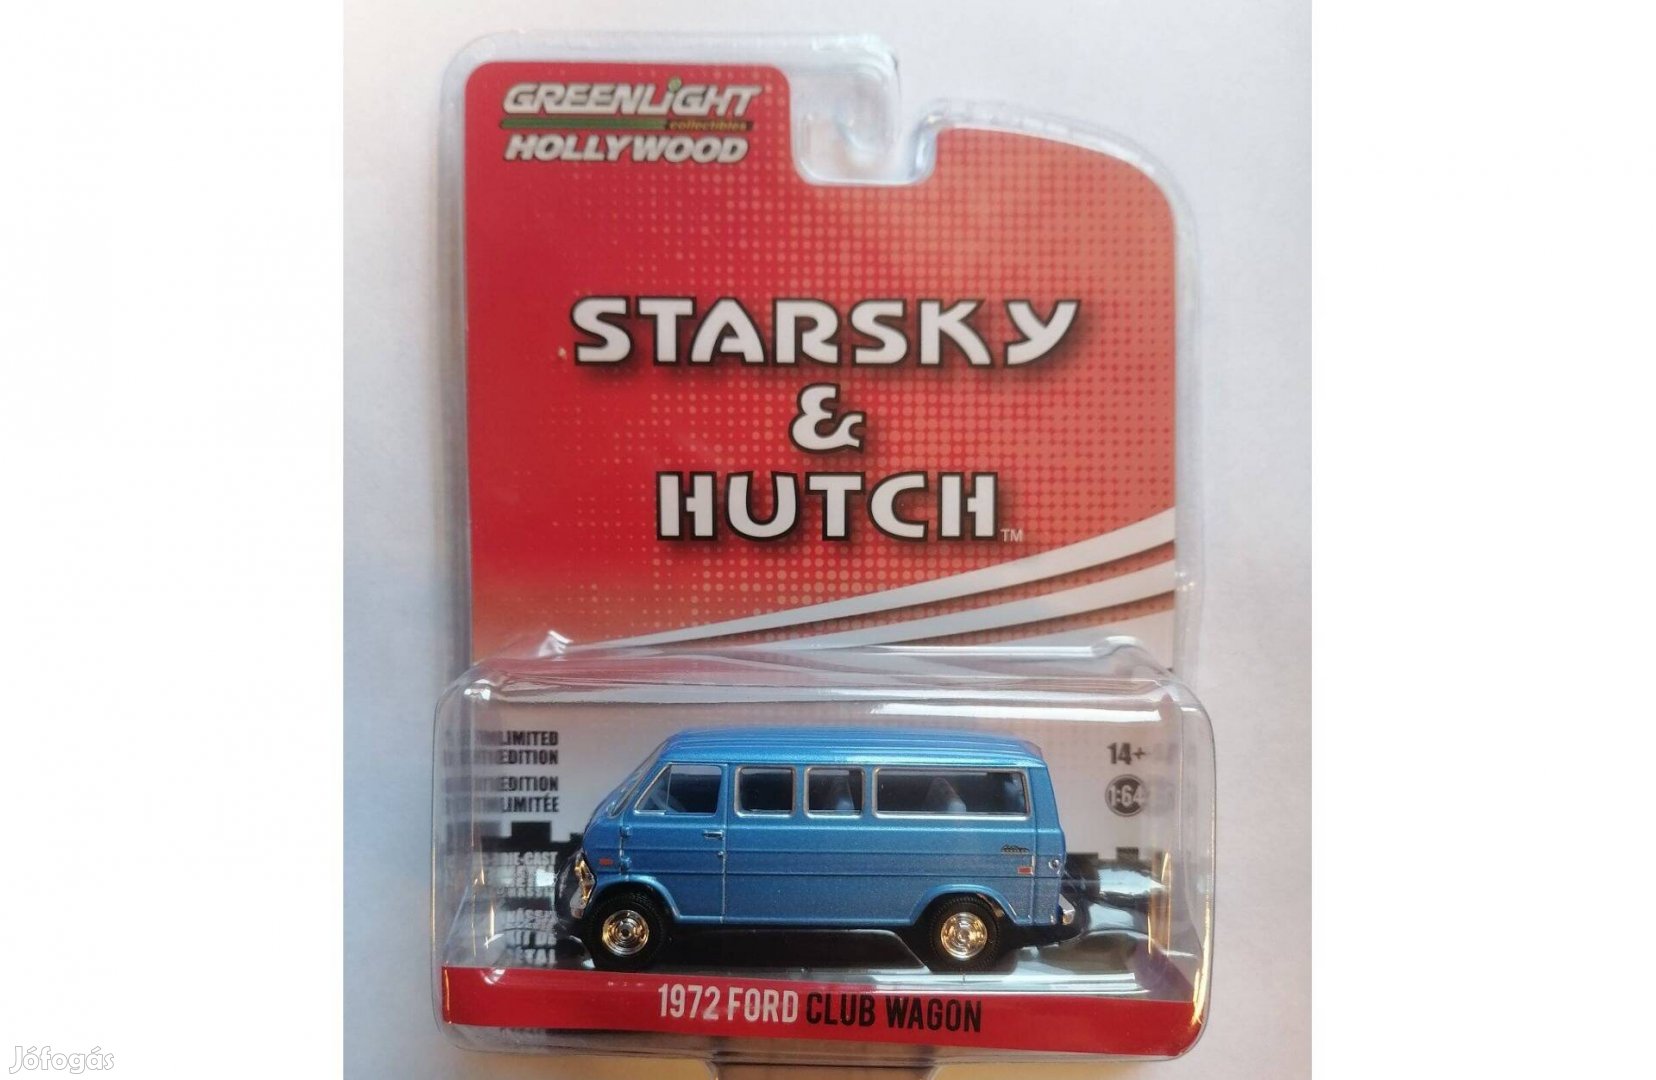 Greenlight Starsky and Hutch 1972 Ford Club Wagon